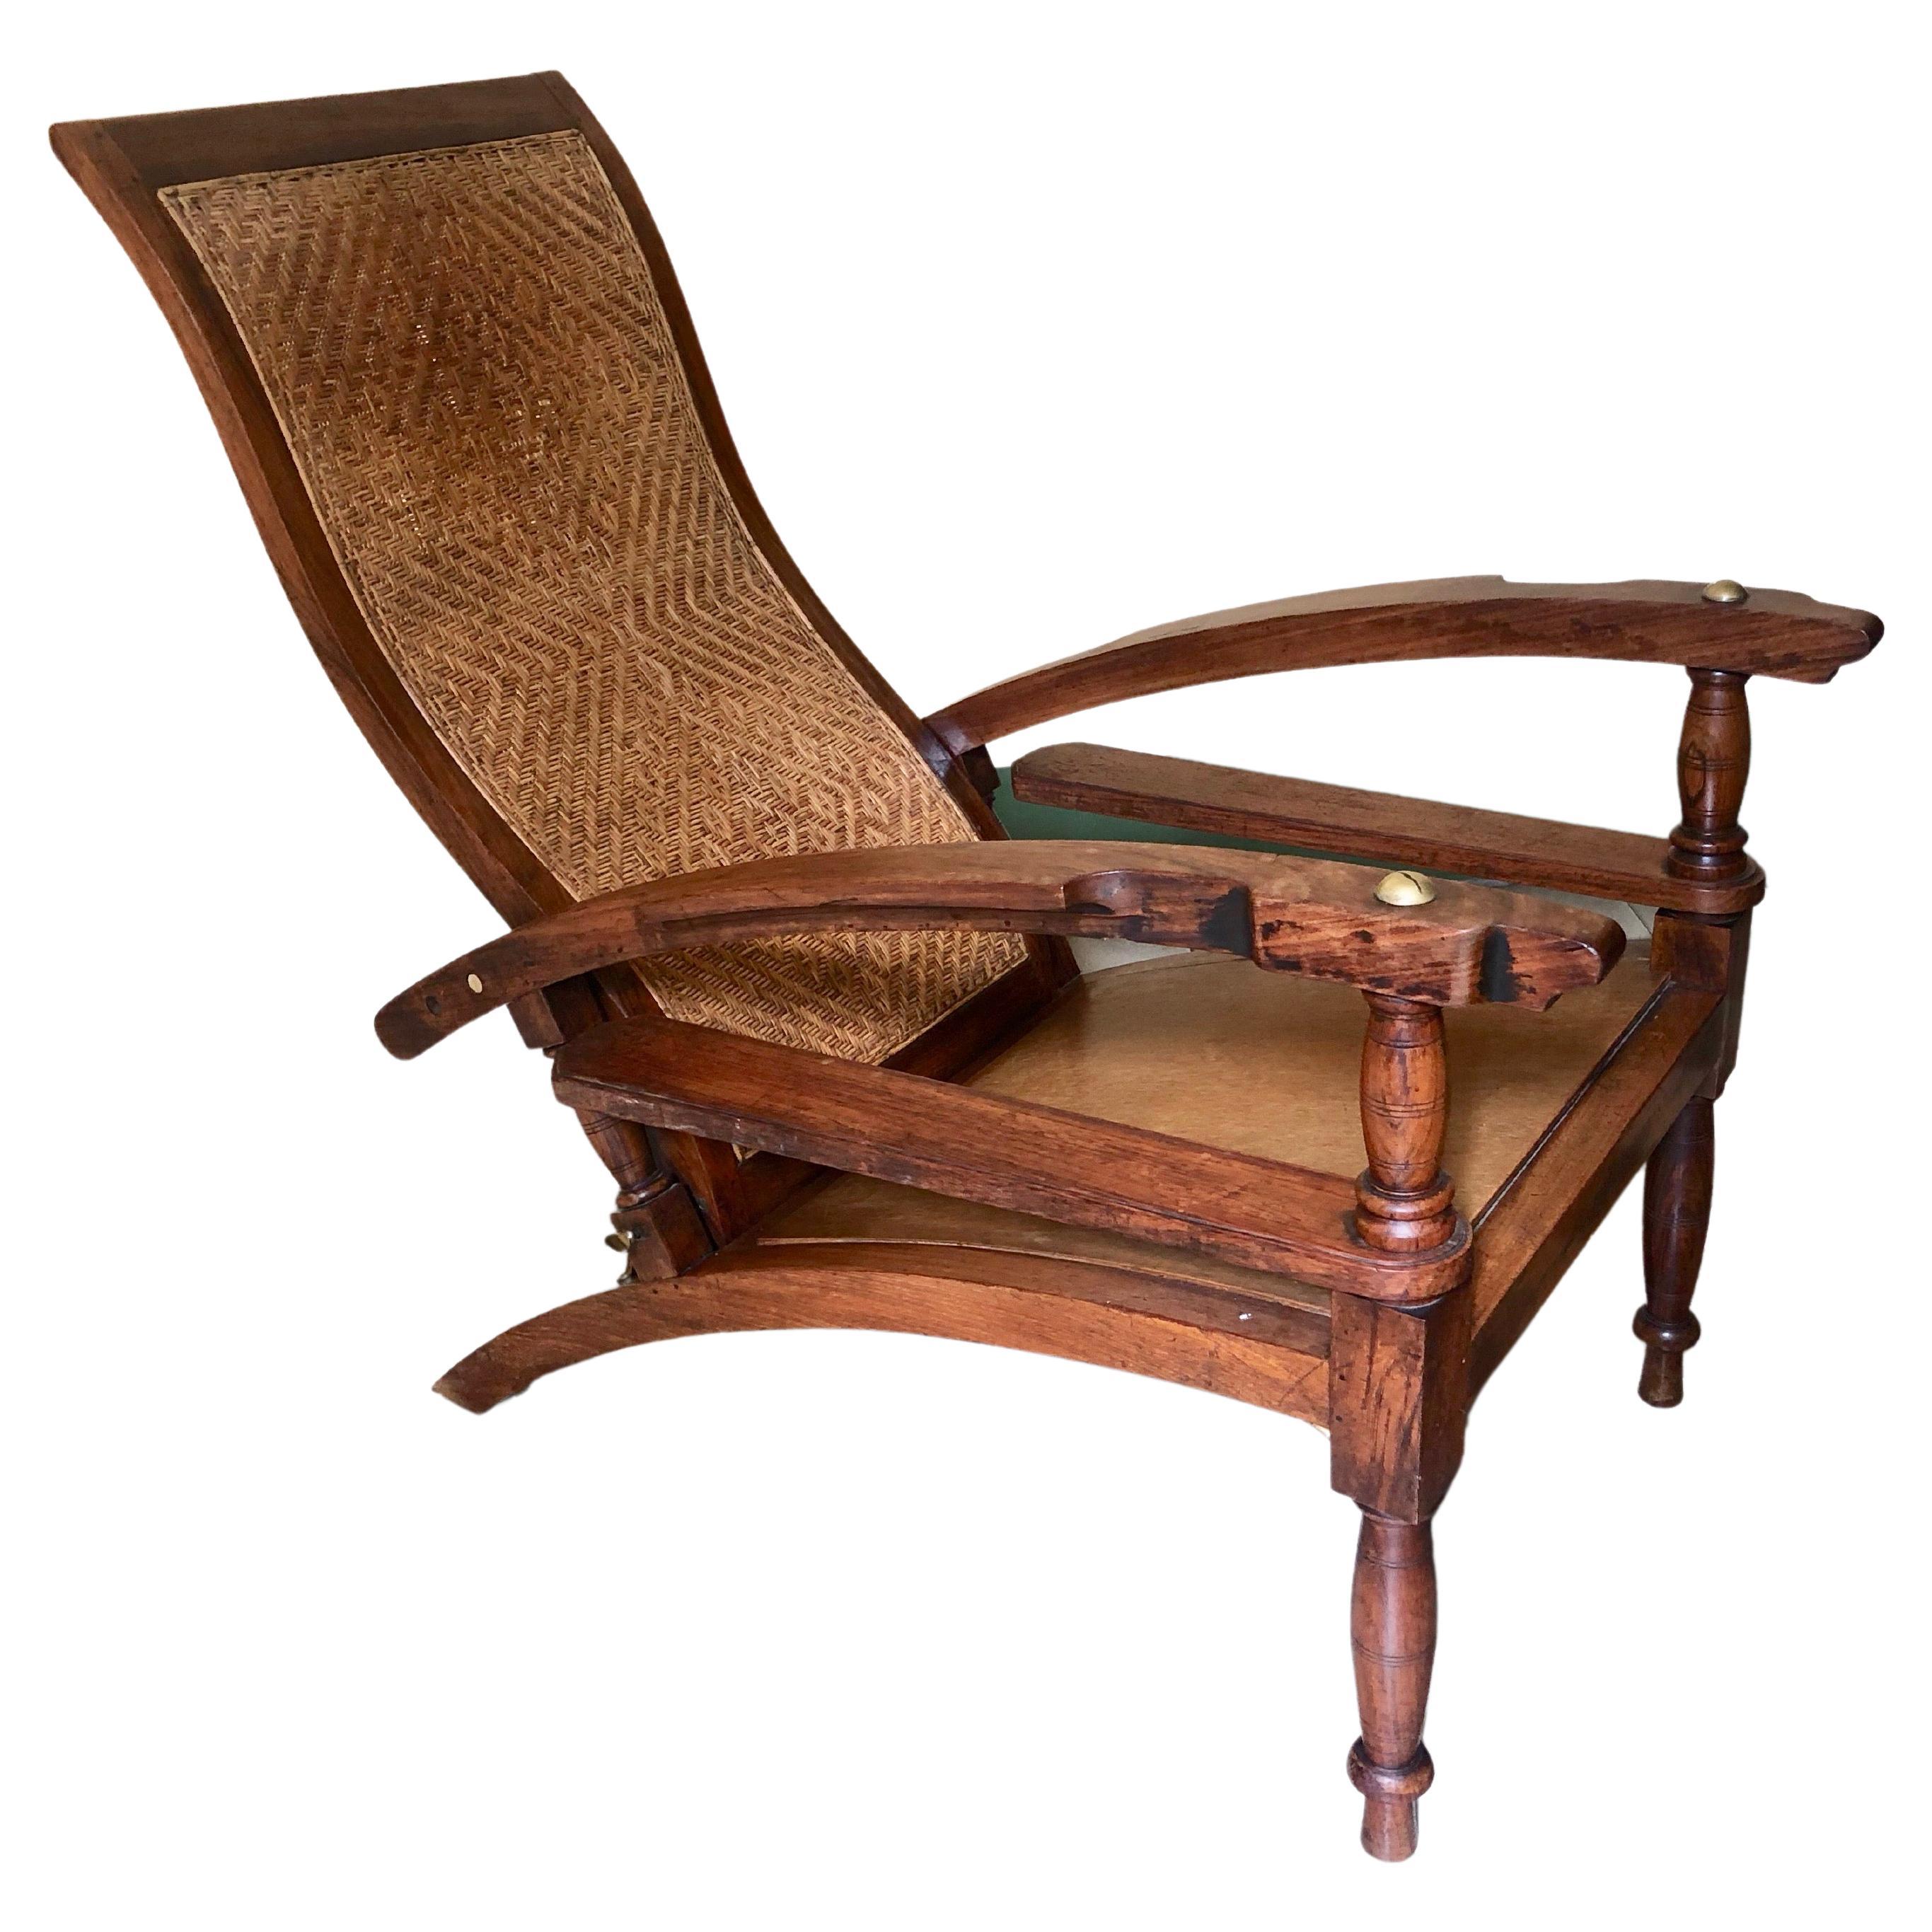 Einzigartiger Jugendstil-Sessel, hergestellt 1908